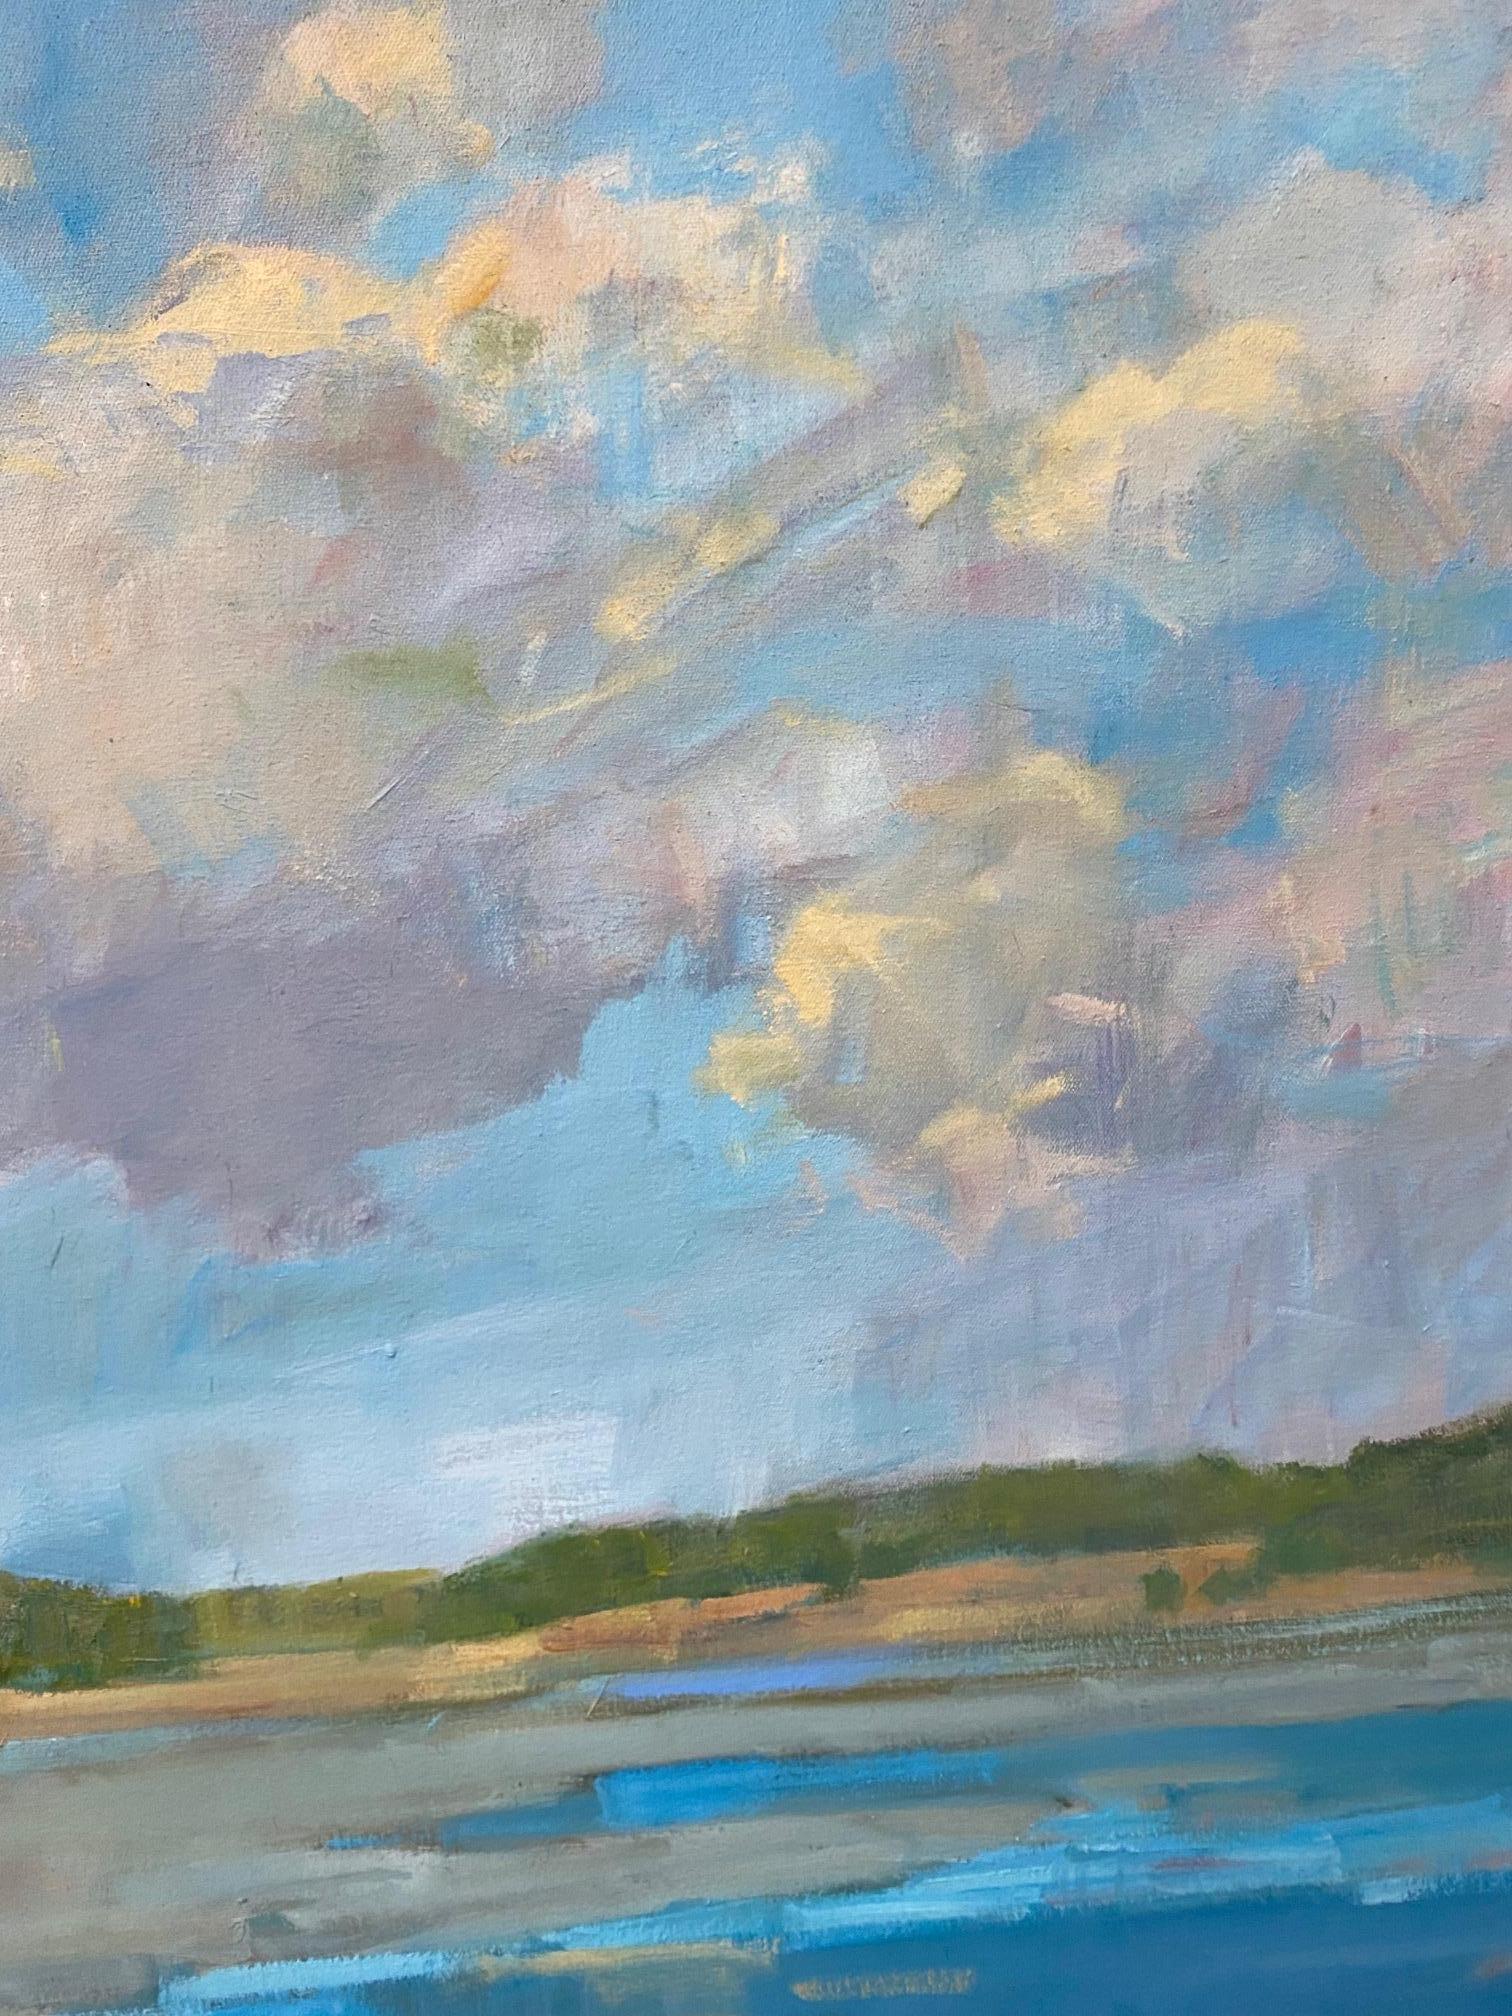 Tranquil Moment, original 32x36 paysage marin expressionniste abstrait - Expressionnisme abstrait Painting par Bart DeCeglie